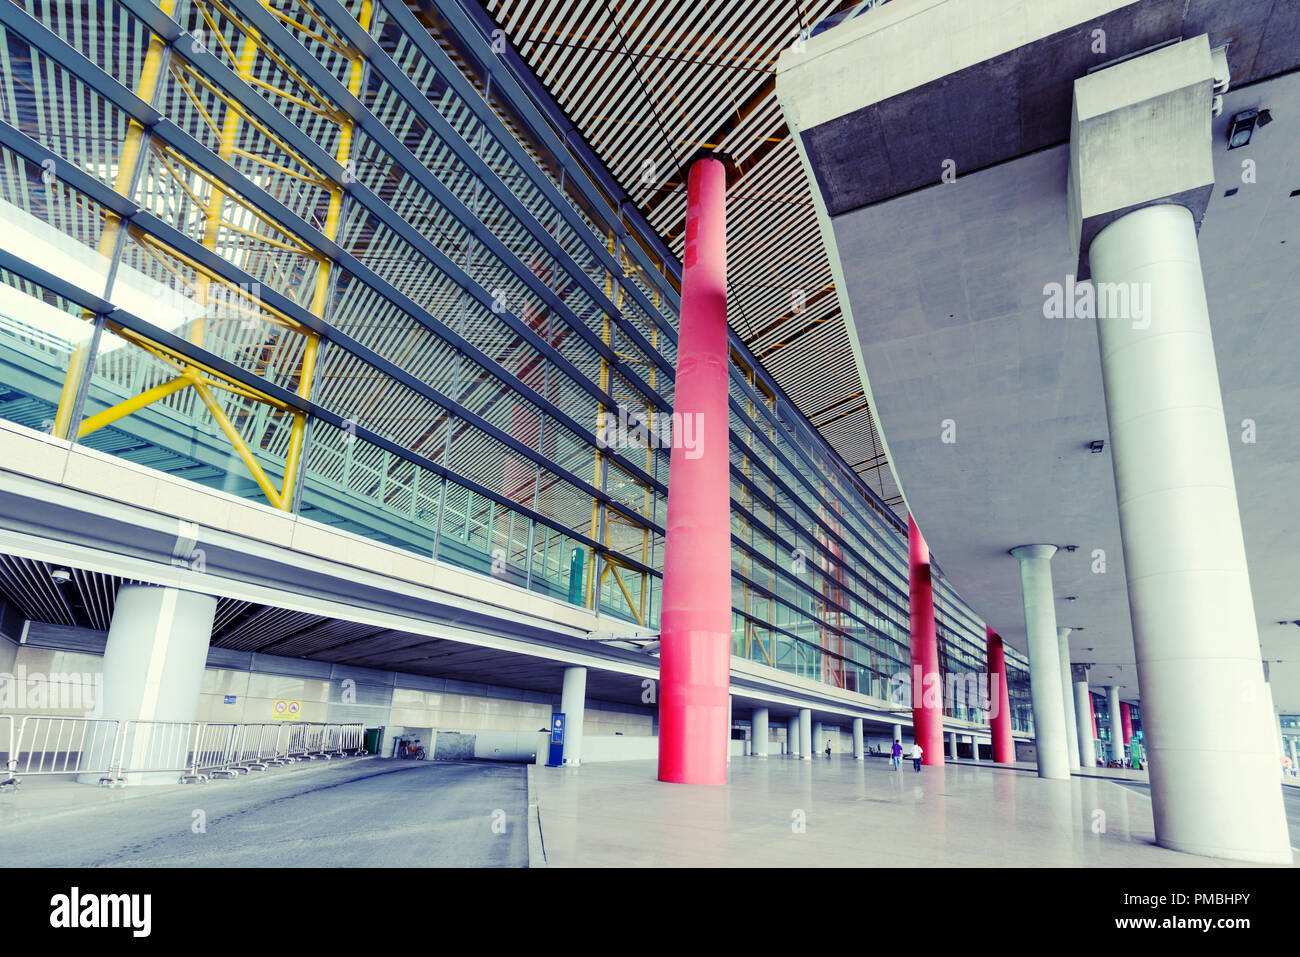 La arquitectura moderna del aeropuerto Pudong de Shanghai, China. Foto de stock